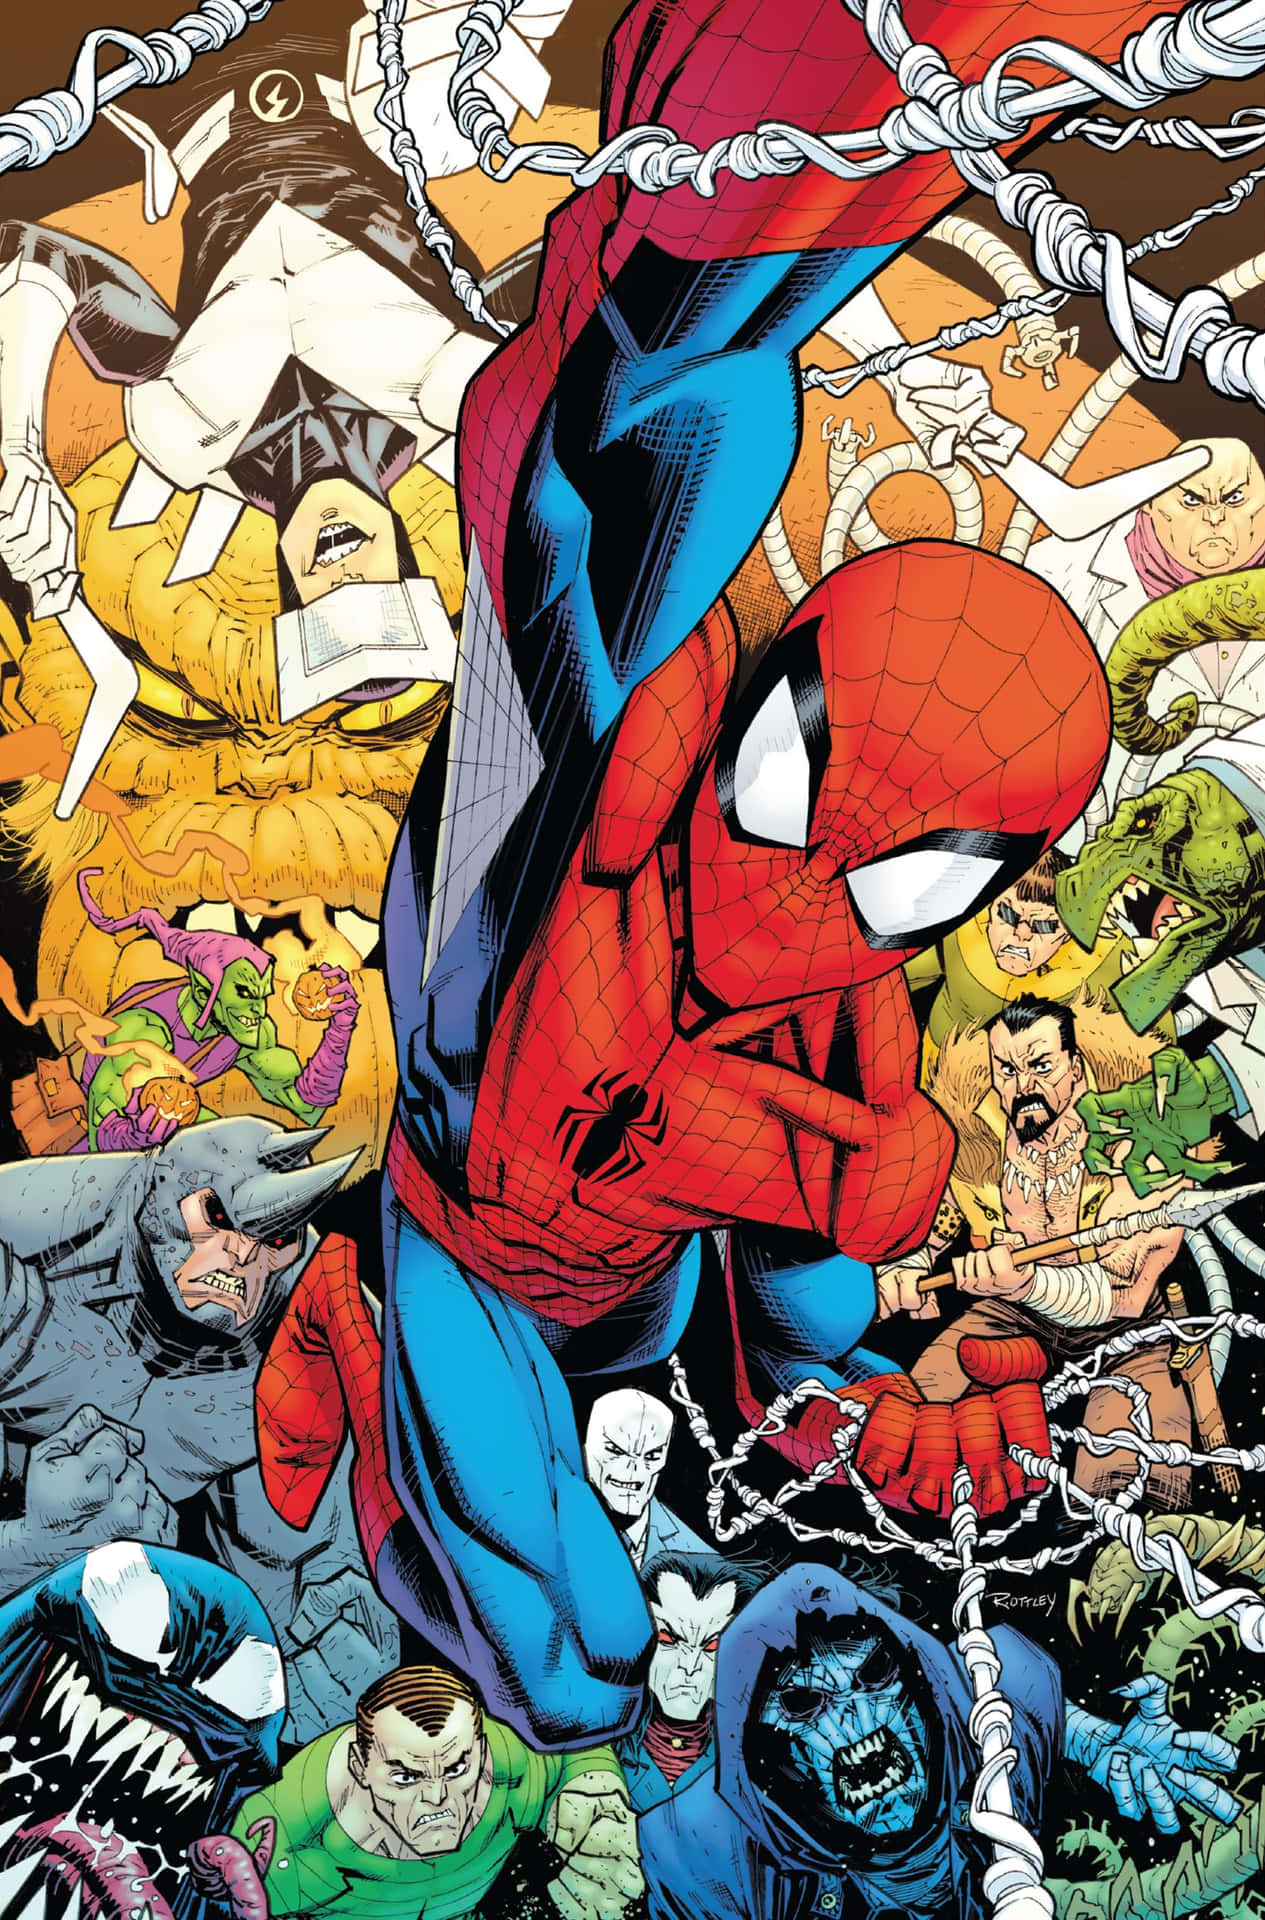 Spider-man Swinging Through Marvel's New York City!